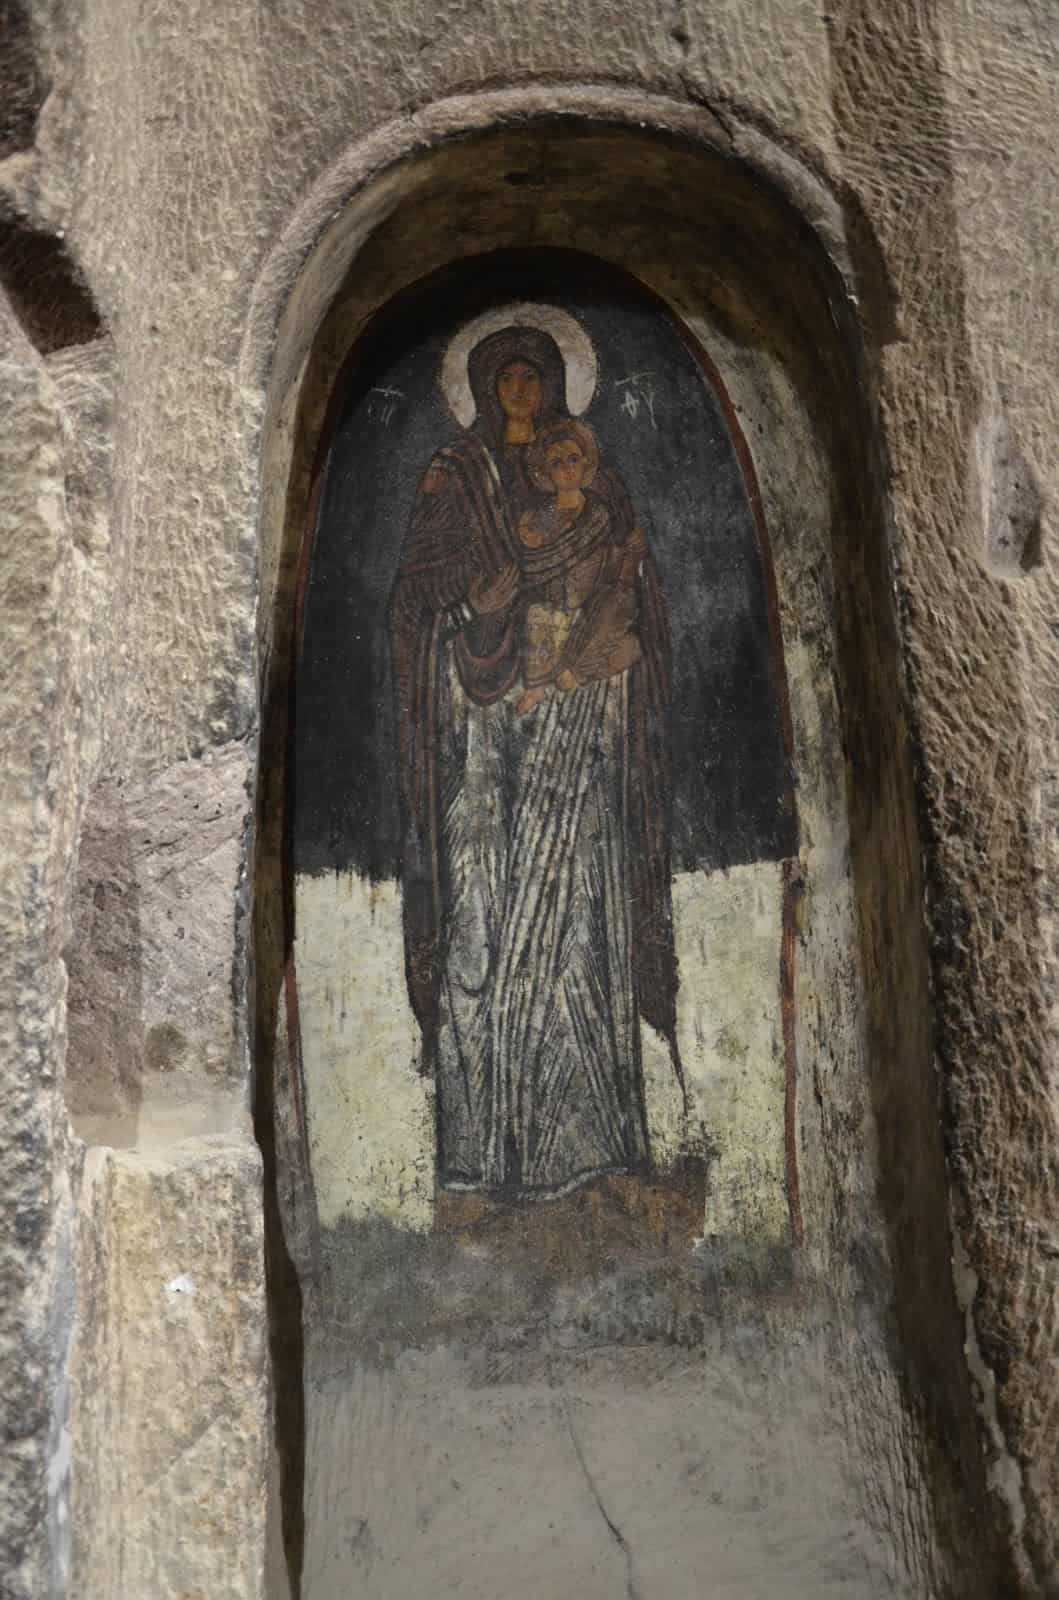 Fresco of the Virgin and Child in the church at Eski Gümüşler Monastery in Turkey